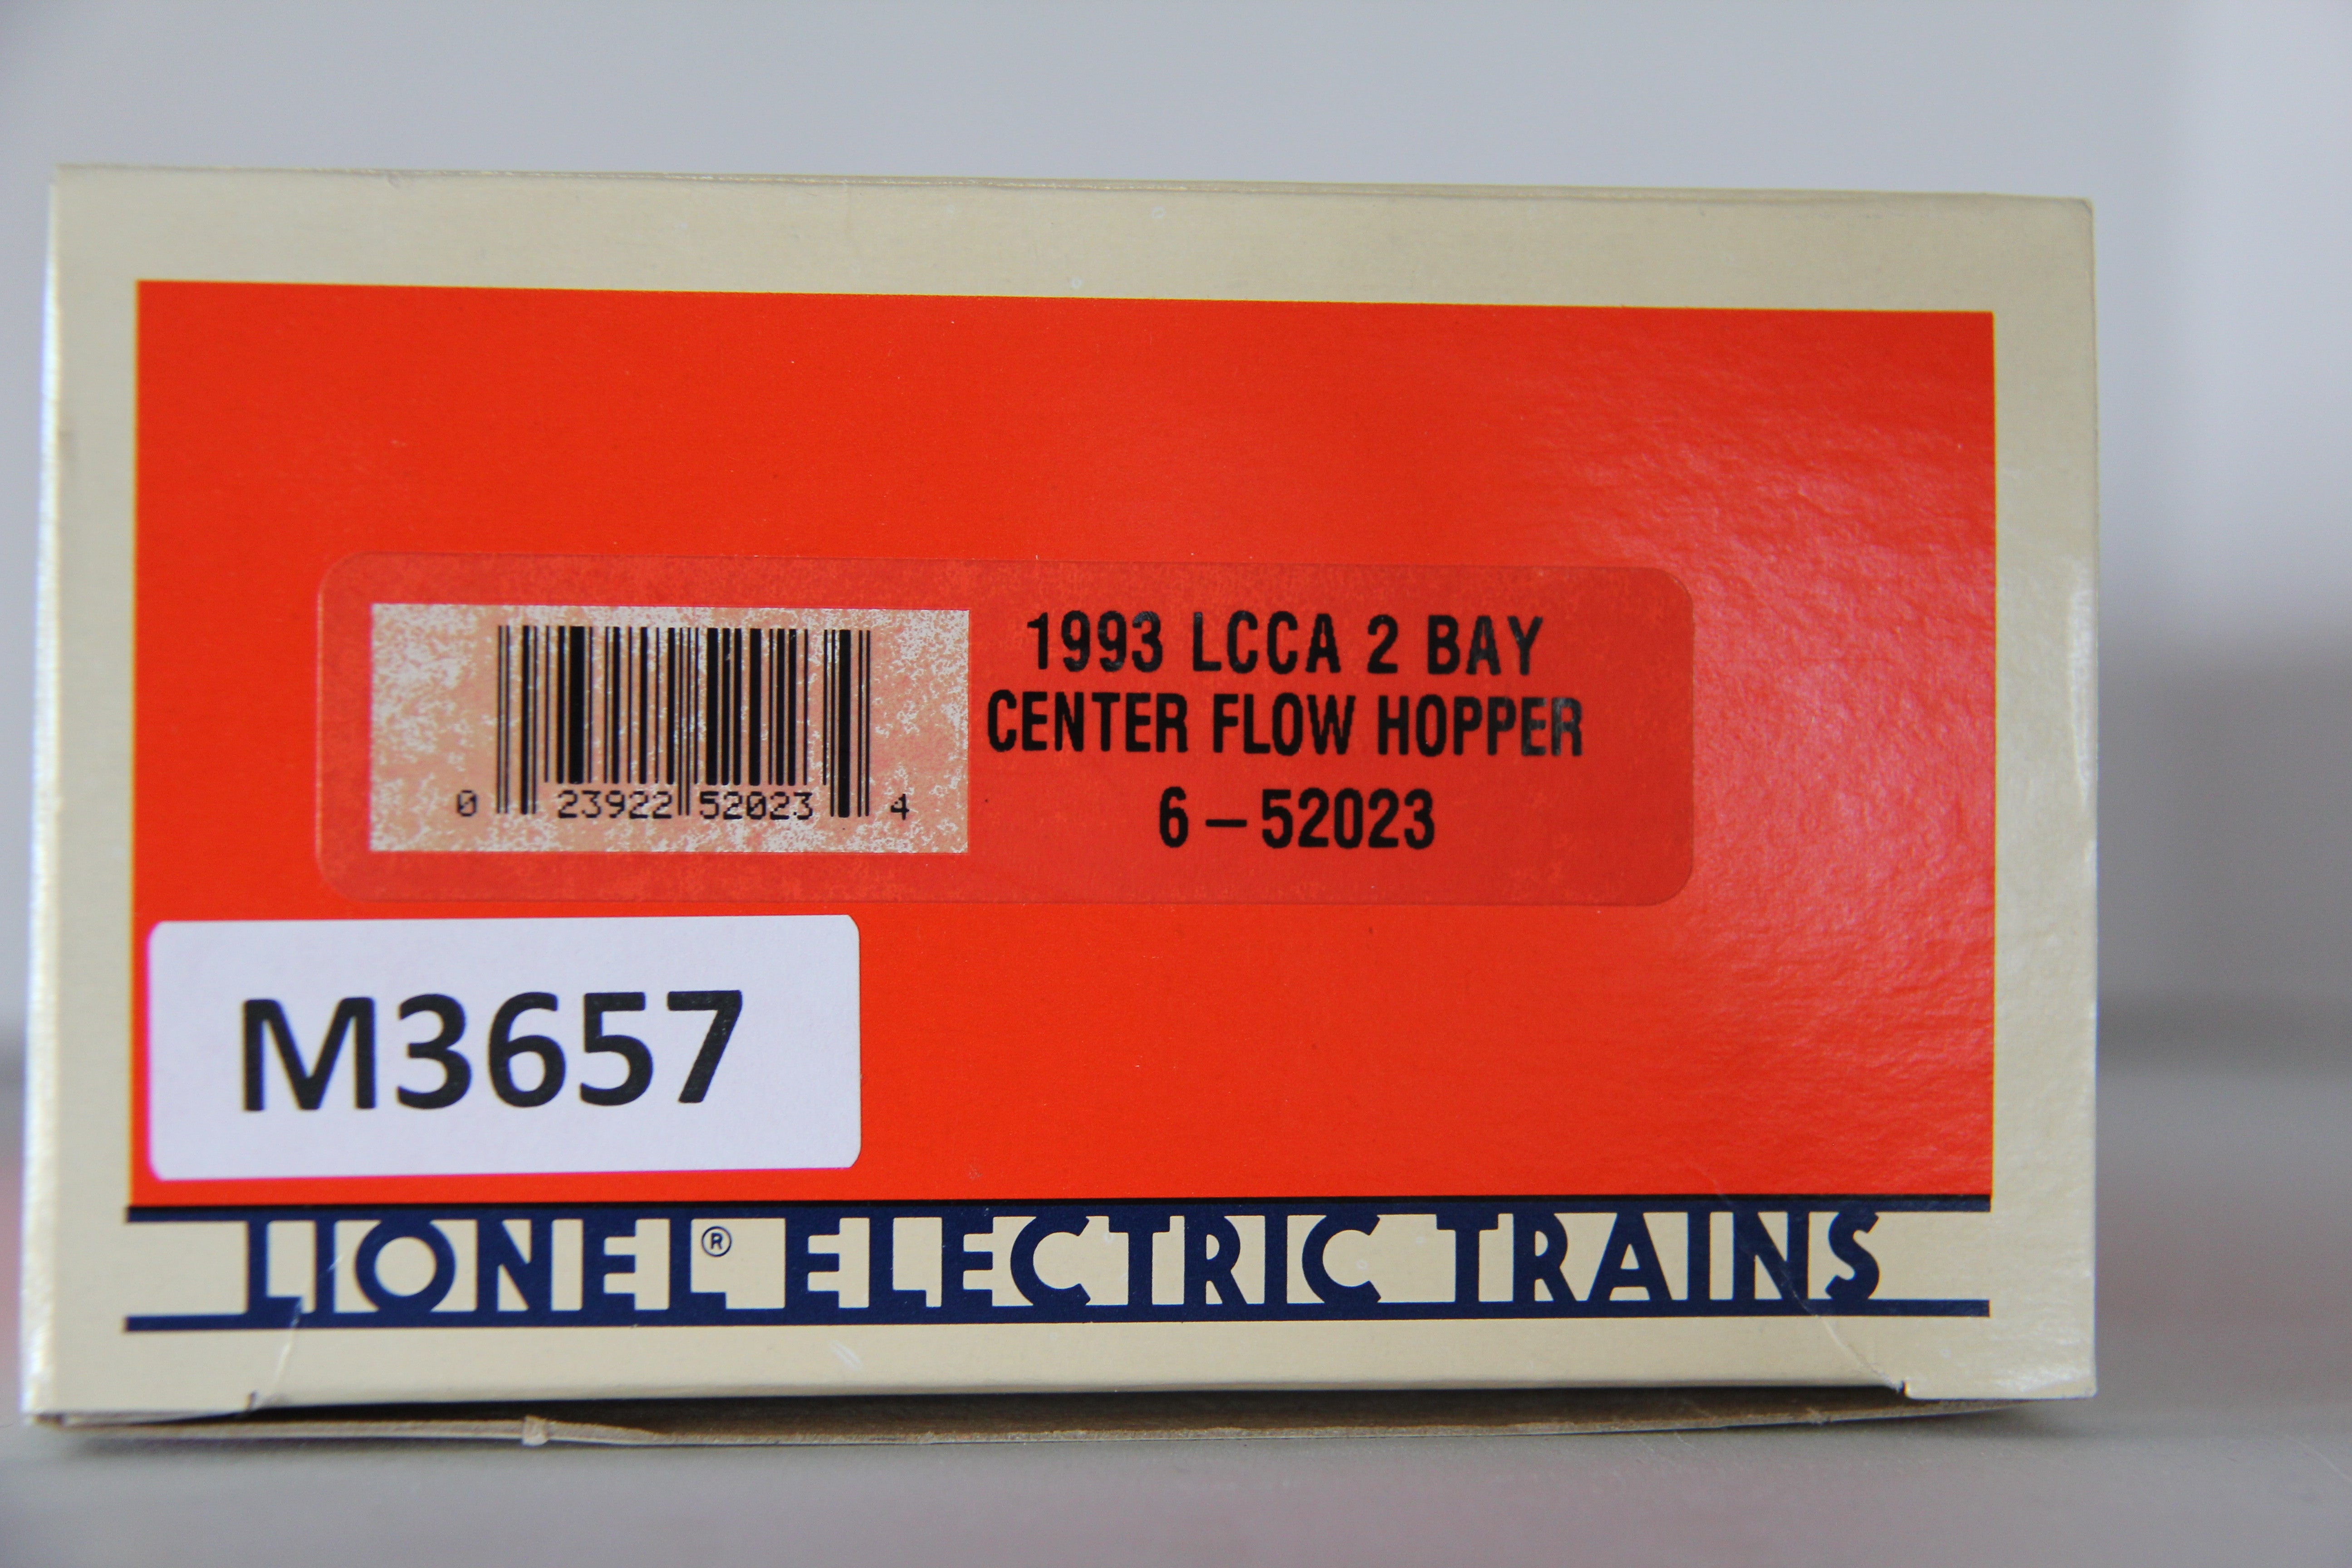 Lionel 6-52023-1993 LCCA 2 Bay Center Flow Hopper-Second hand-M3657